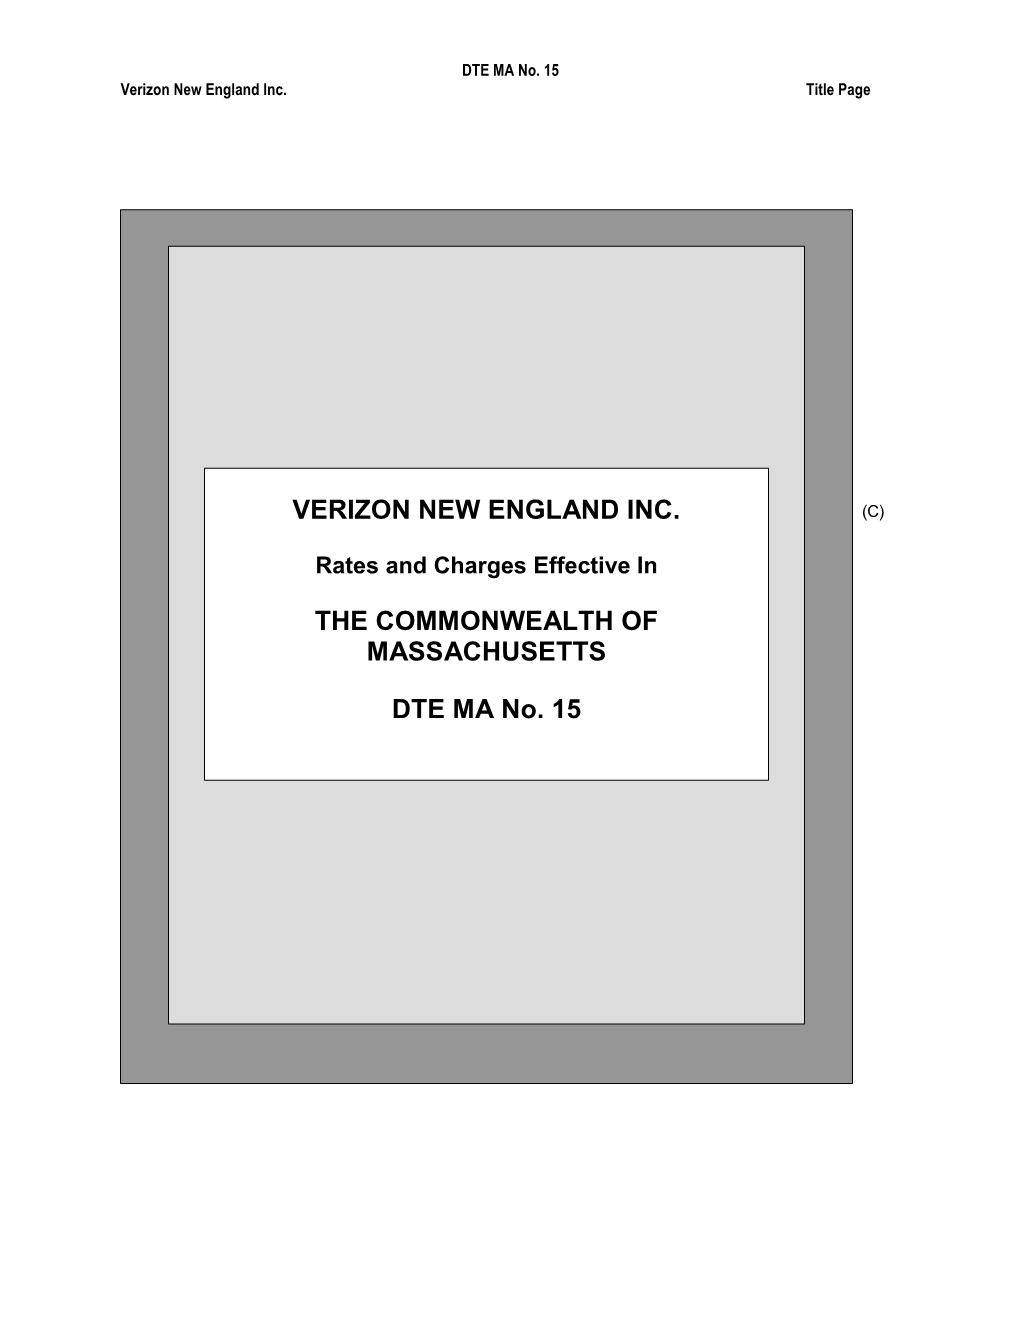 Verizon New England Inc. the Commonwealth Of